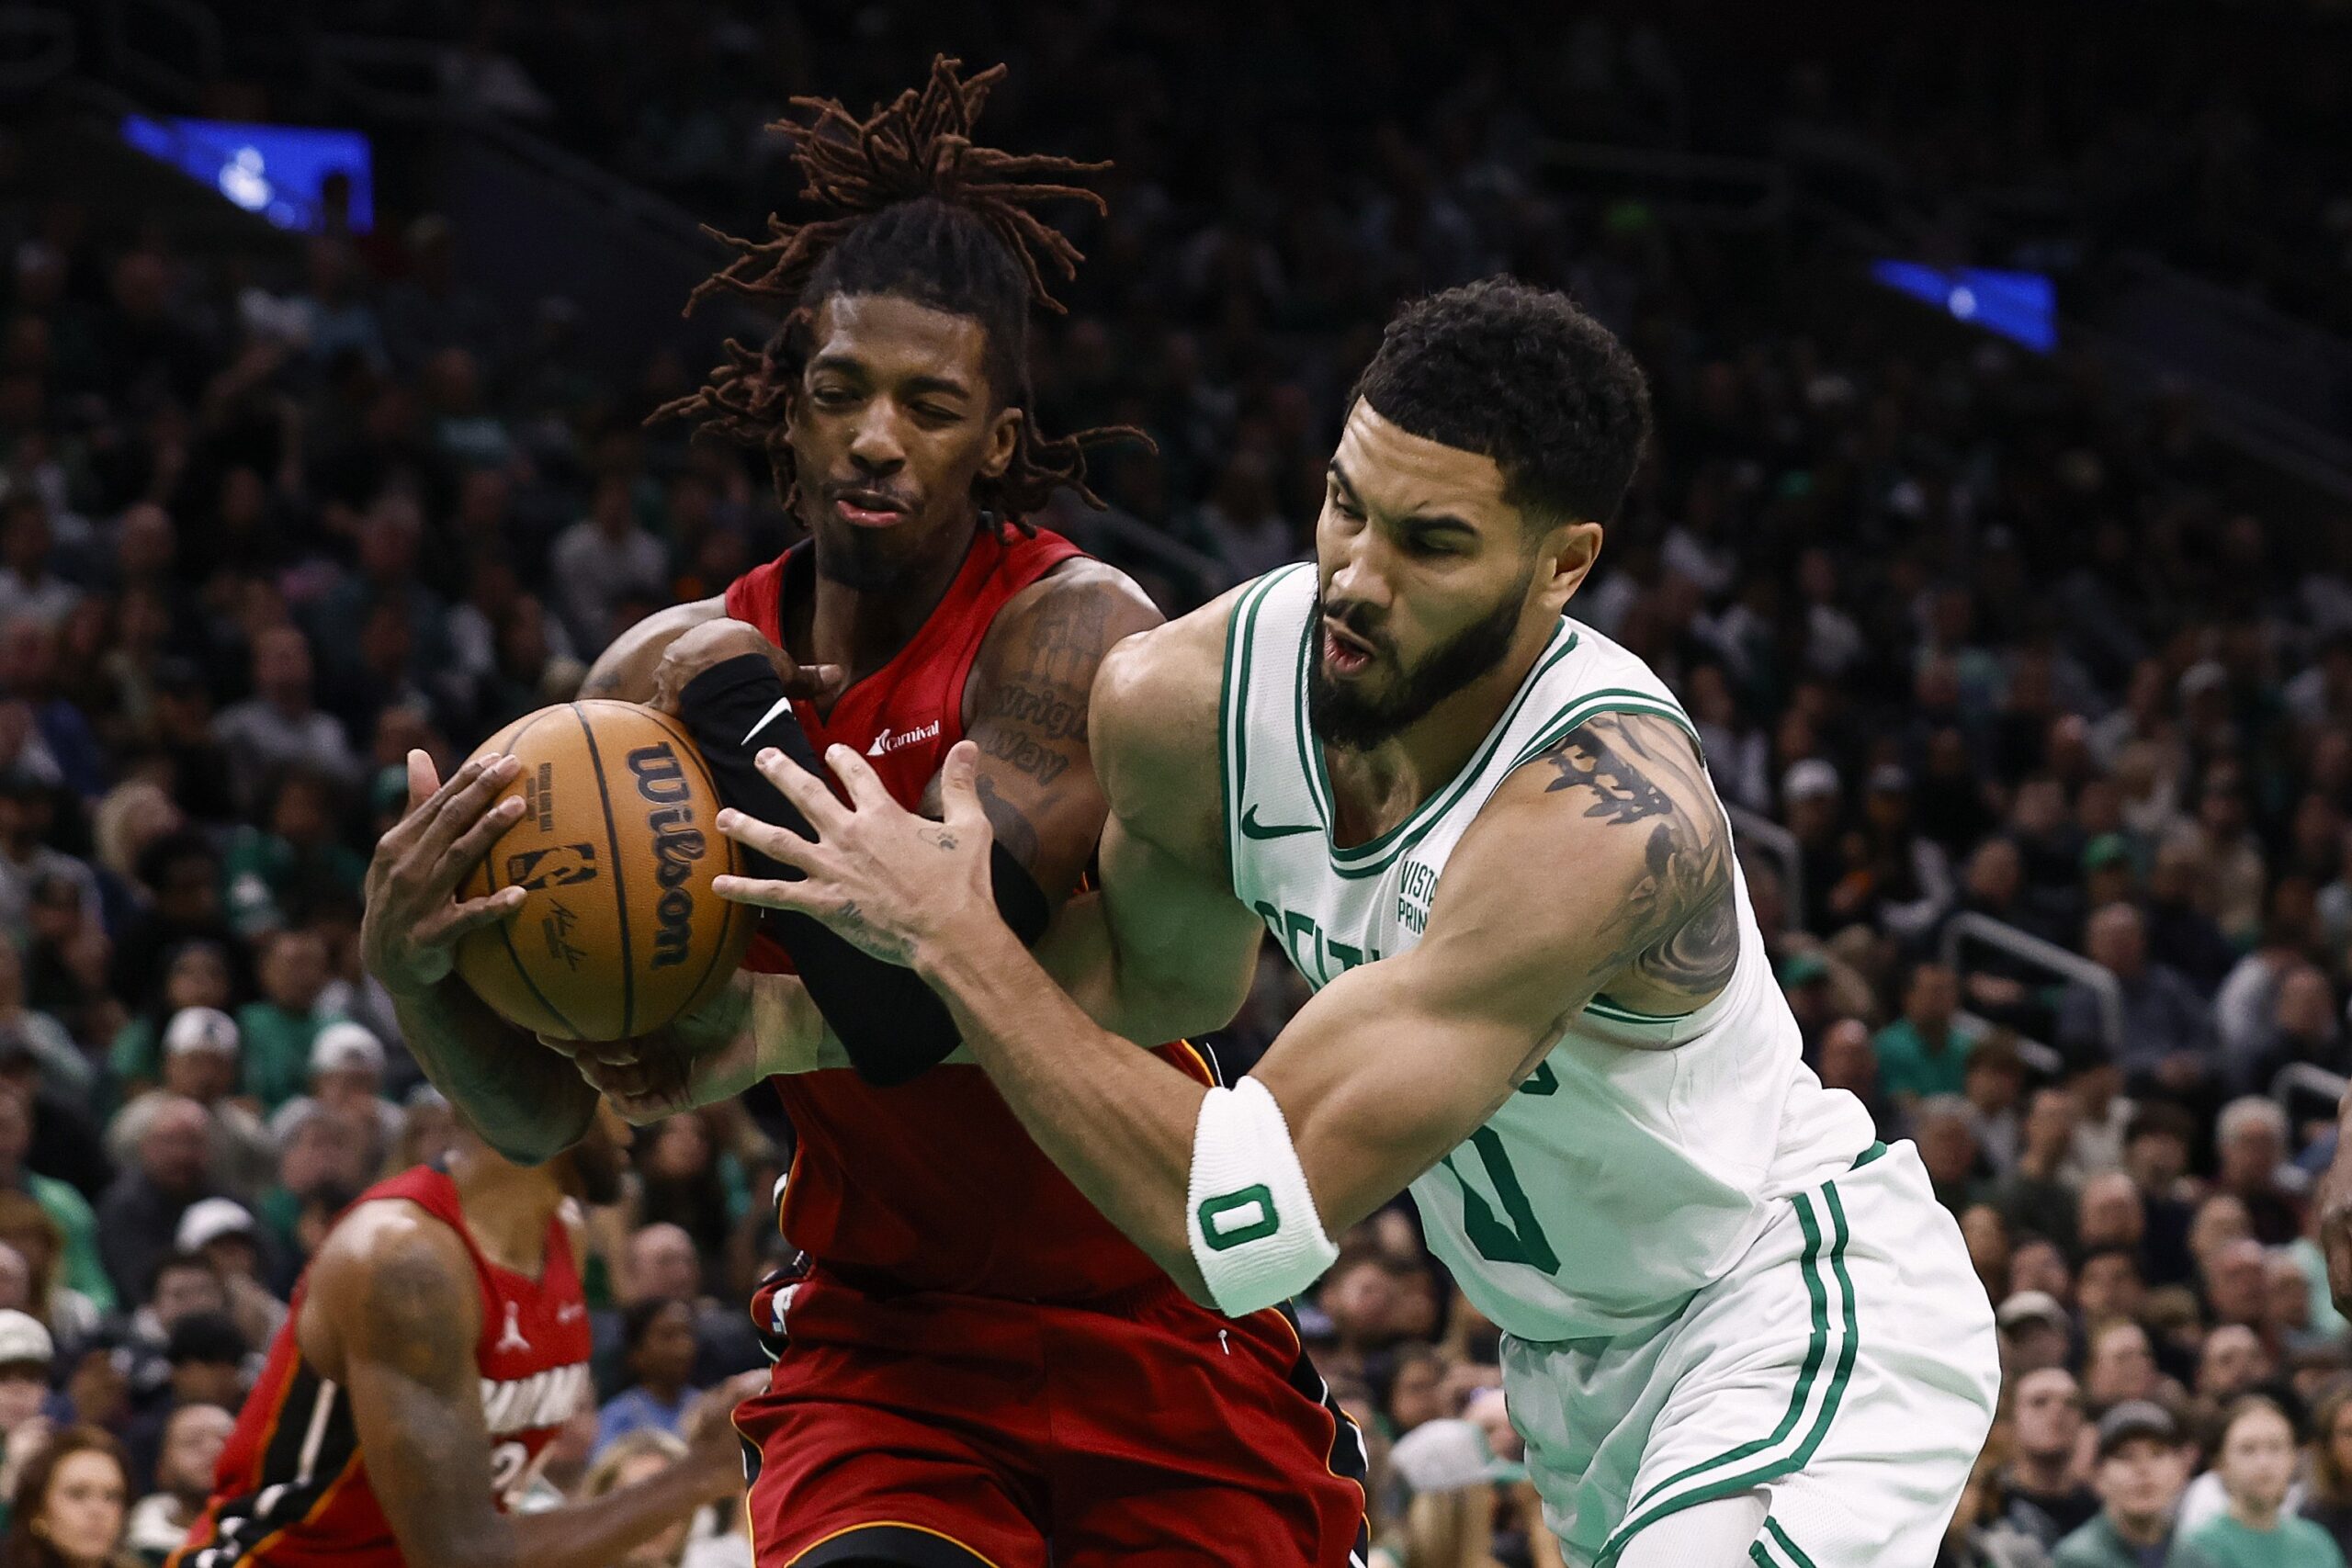 Jayson Tatum of the Boston Celtics battles Delon Wright of the Miami Heat